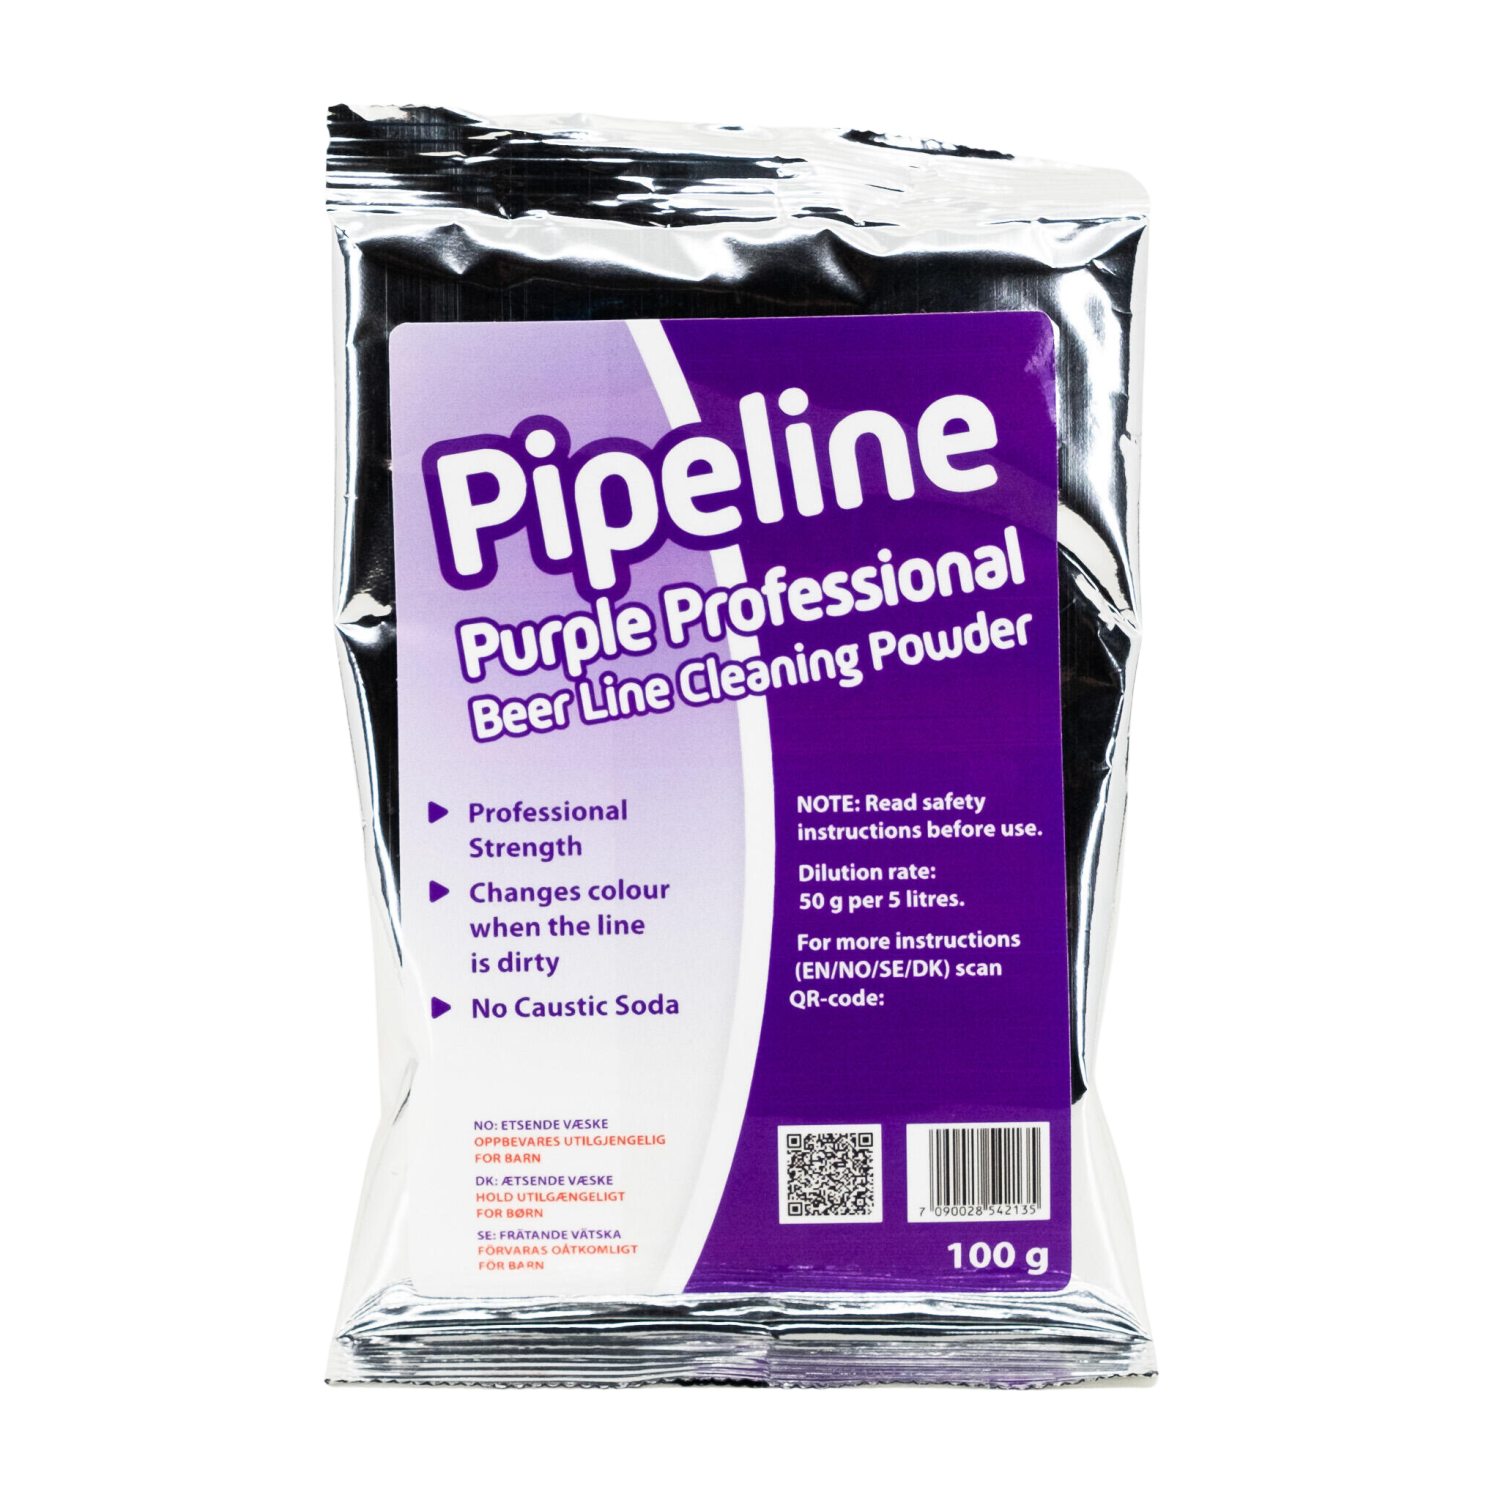 Pipeline Purple Professional 100g